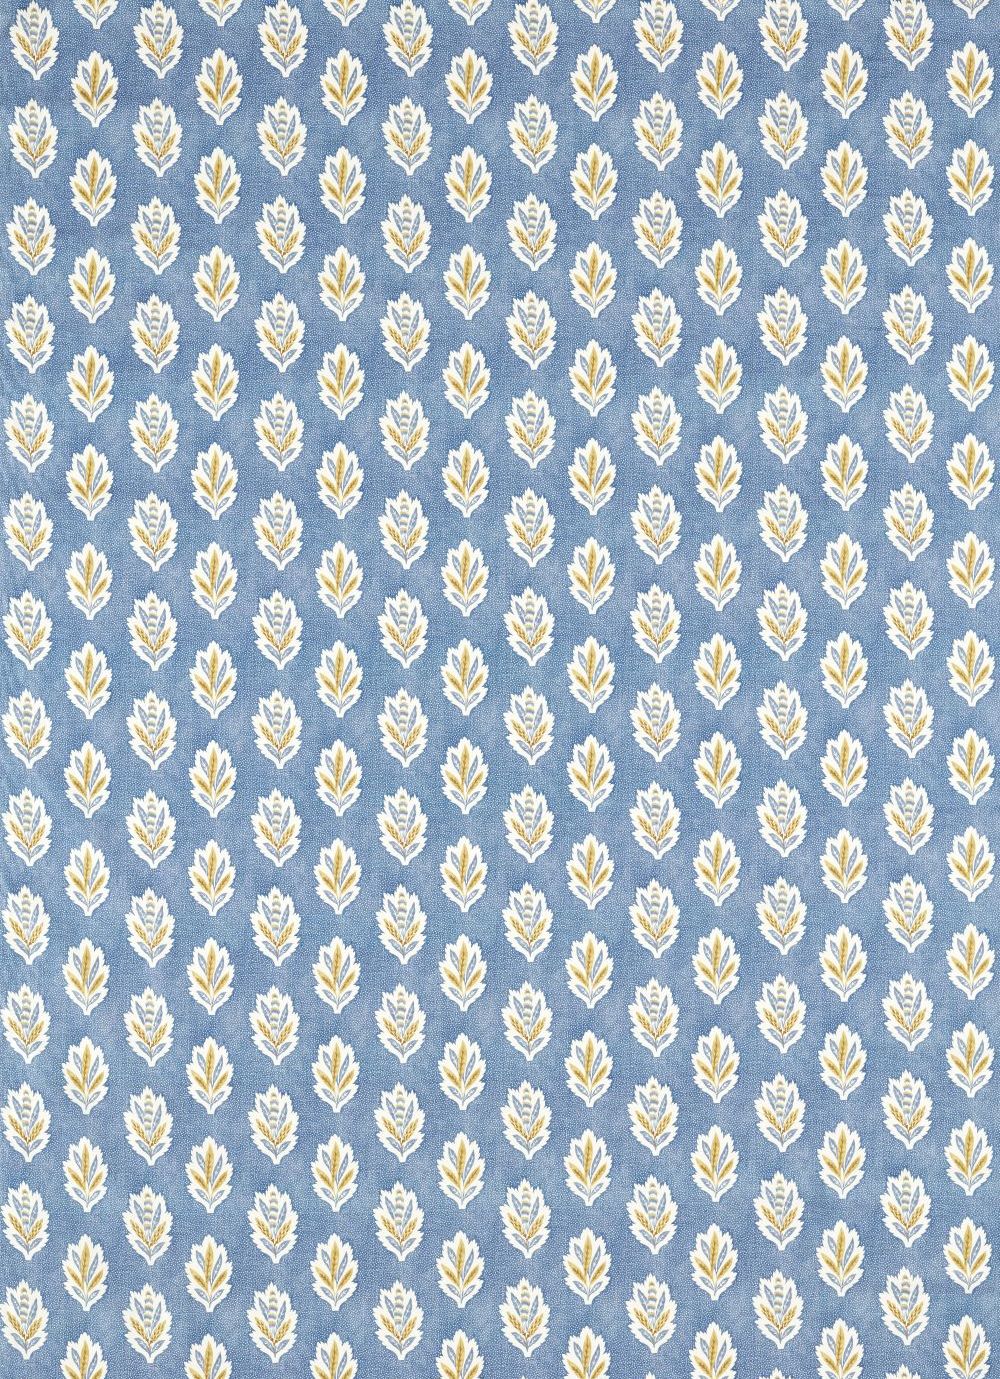 Sessile Leaf Fabric - Cornflower - by Sanderson